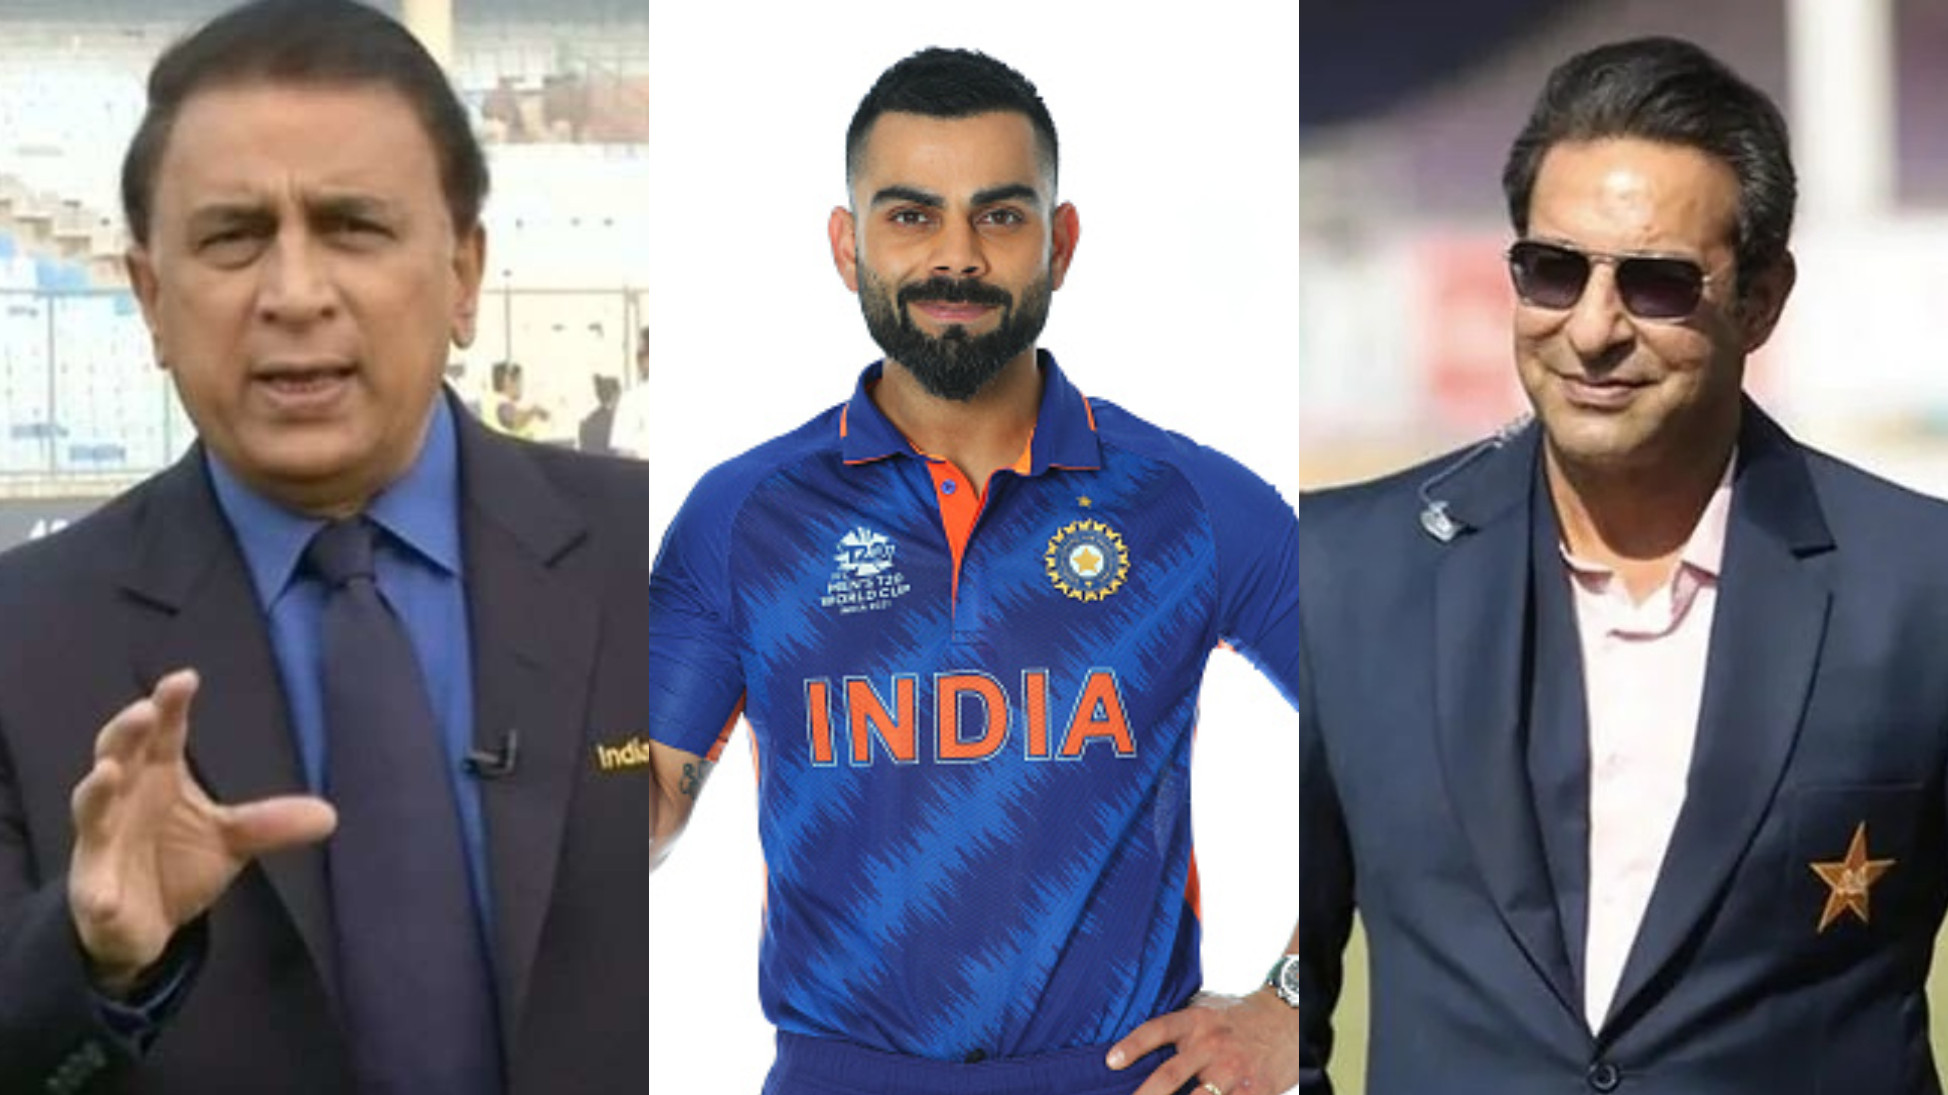 T20 World Cup 2021: Wasim Akram and Sunil Gavaskar react to Virat Kohli quitting India T20I captaincy